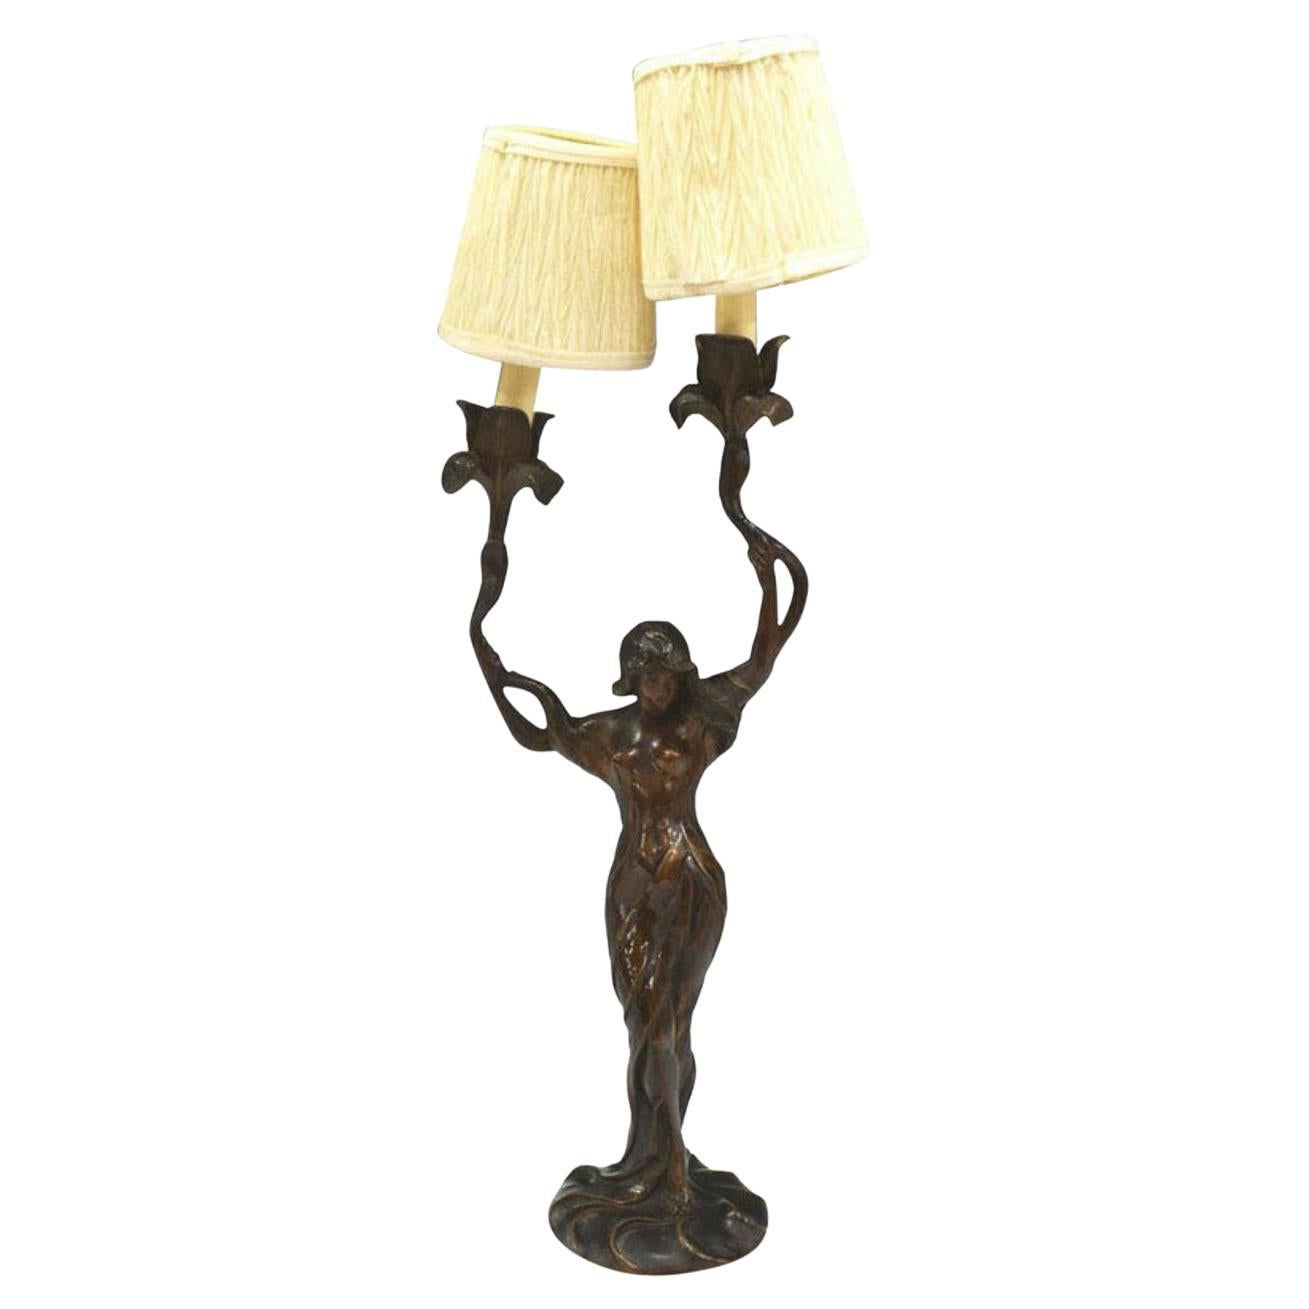 Signed Marcel Debut French Art Nouveau Bronze Sculptural Lamp For Sale